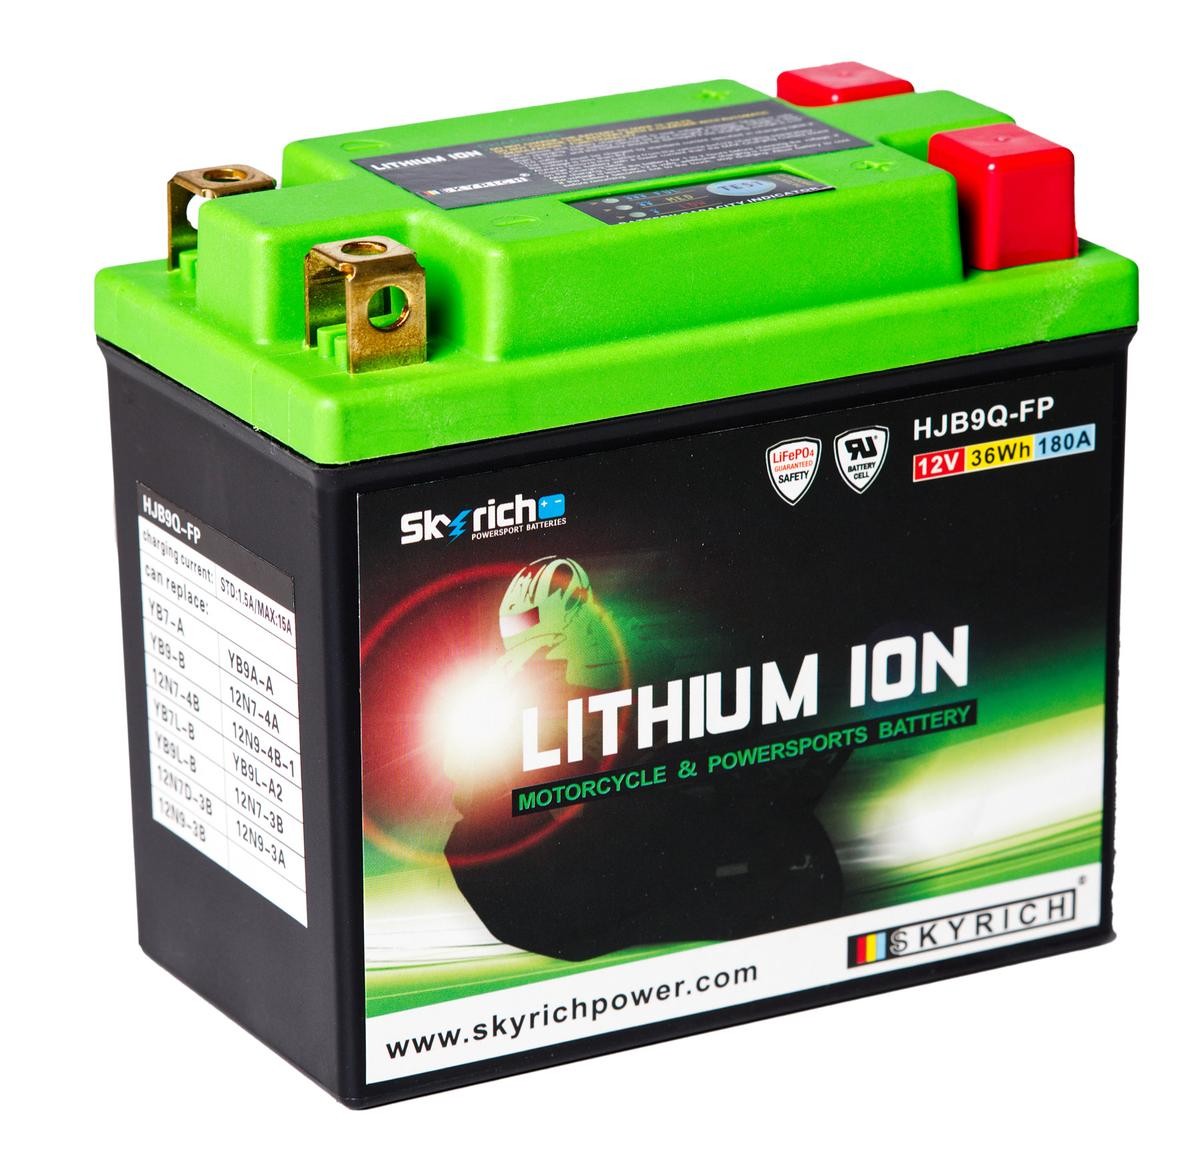 KAWASAKI H Batterie 12V 3Ah 180A N Li-Ionen-Batterie SKYRICH LITHIUM ION HJB9Q-FP